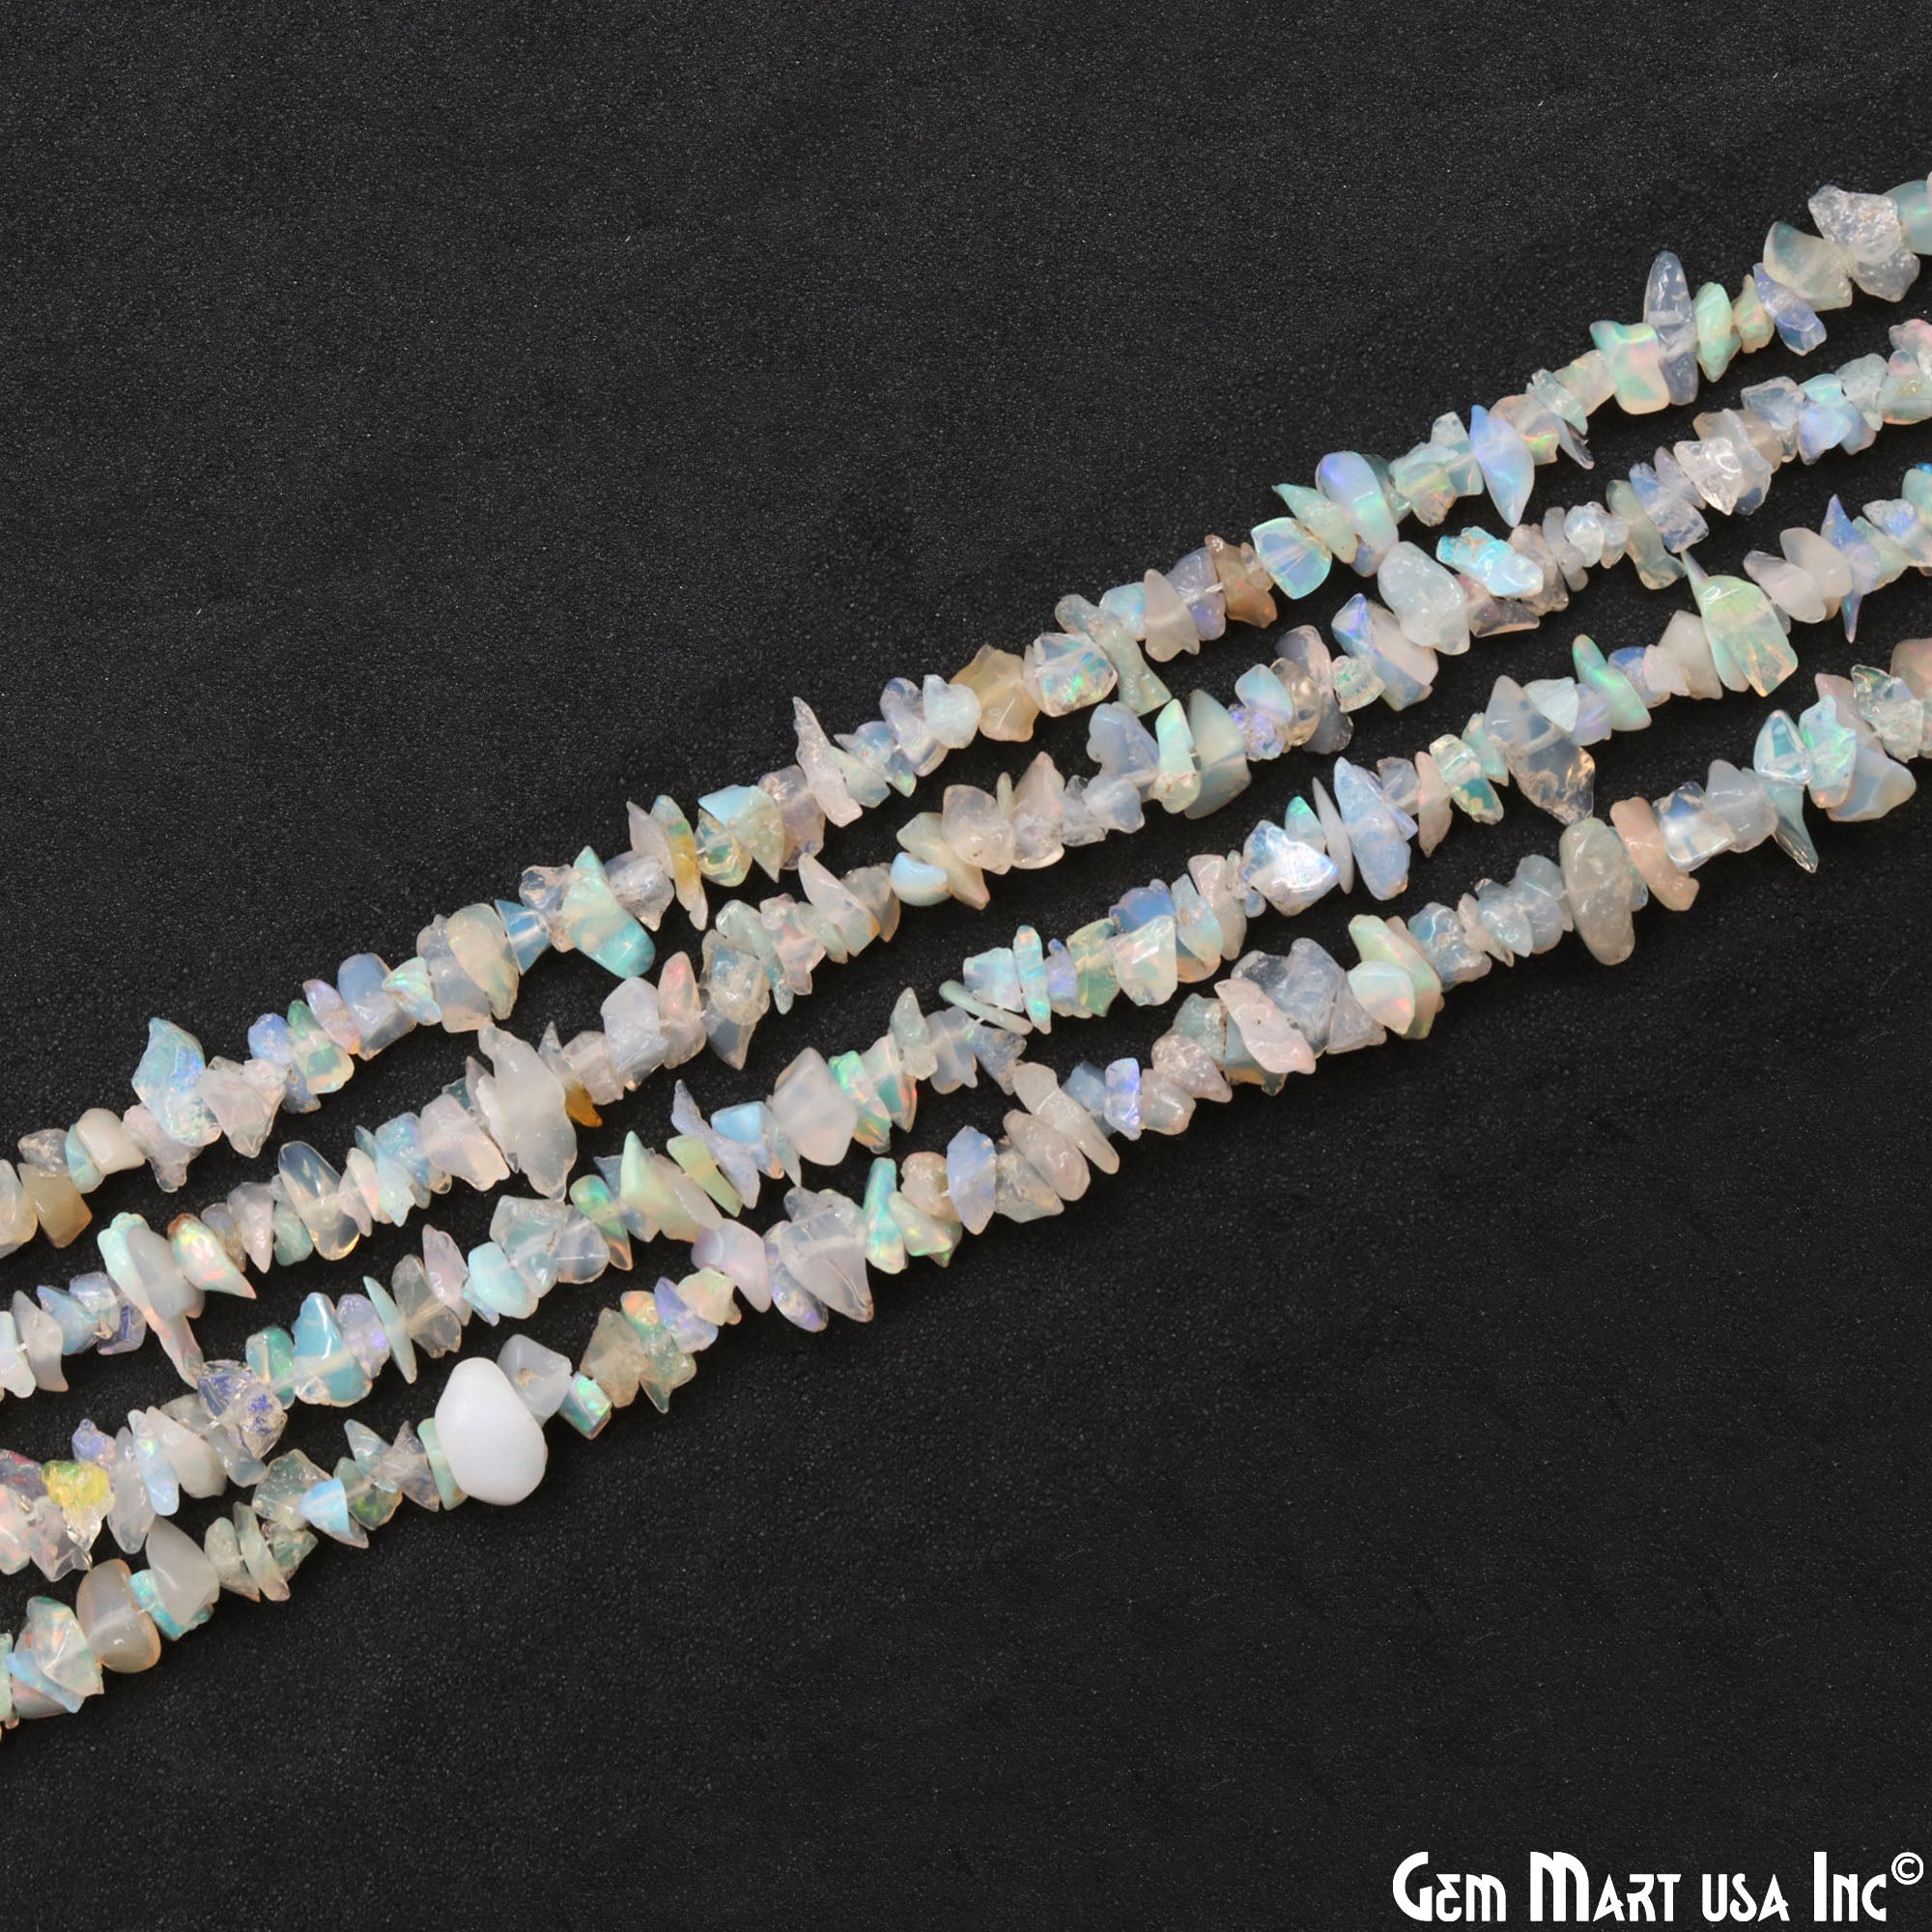 Opal Craft Beads - Moonstone Opal Beads - Jewelry Making & Crafts